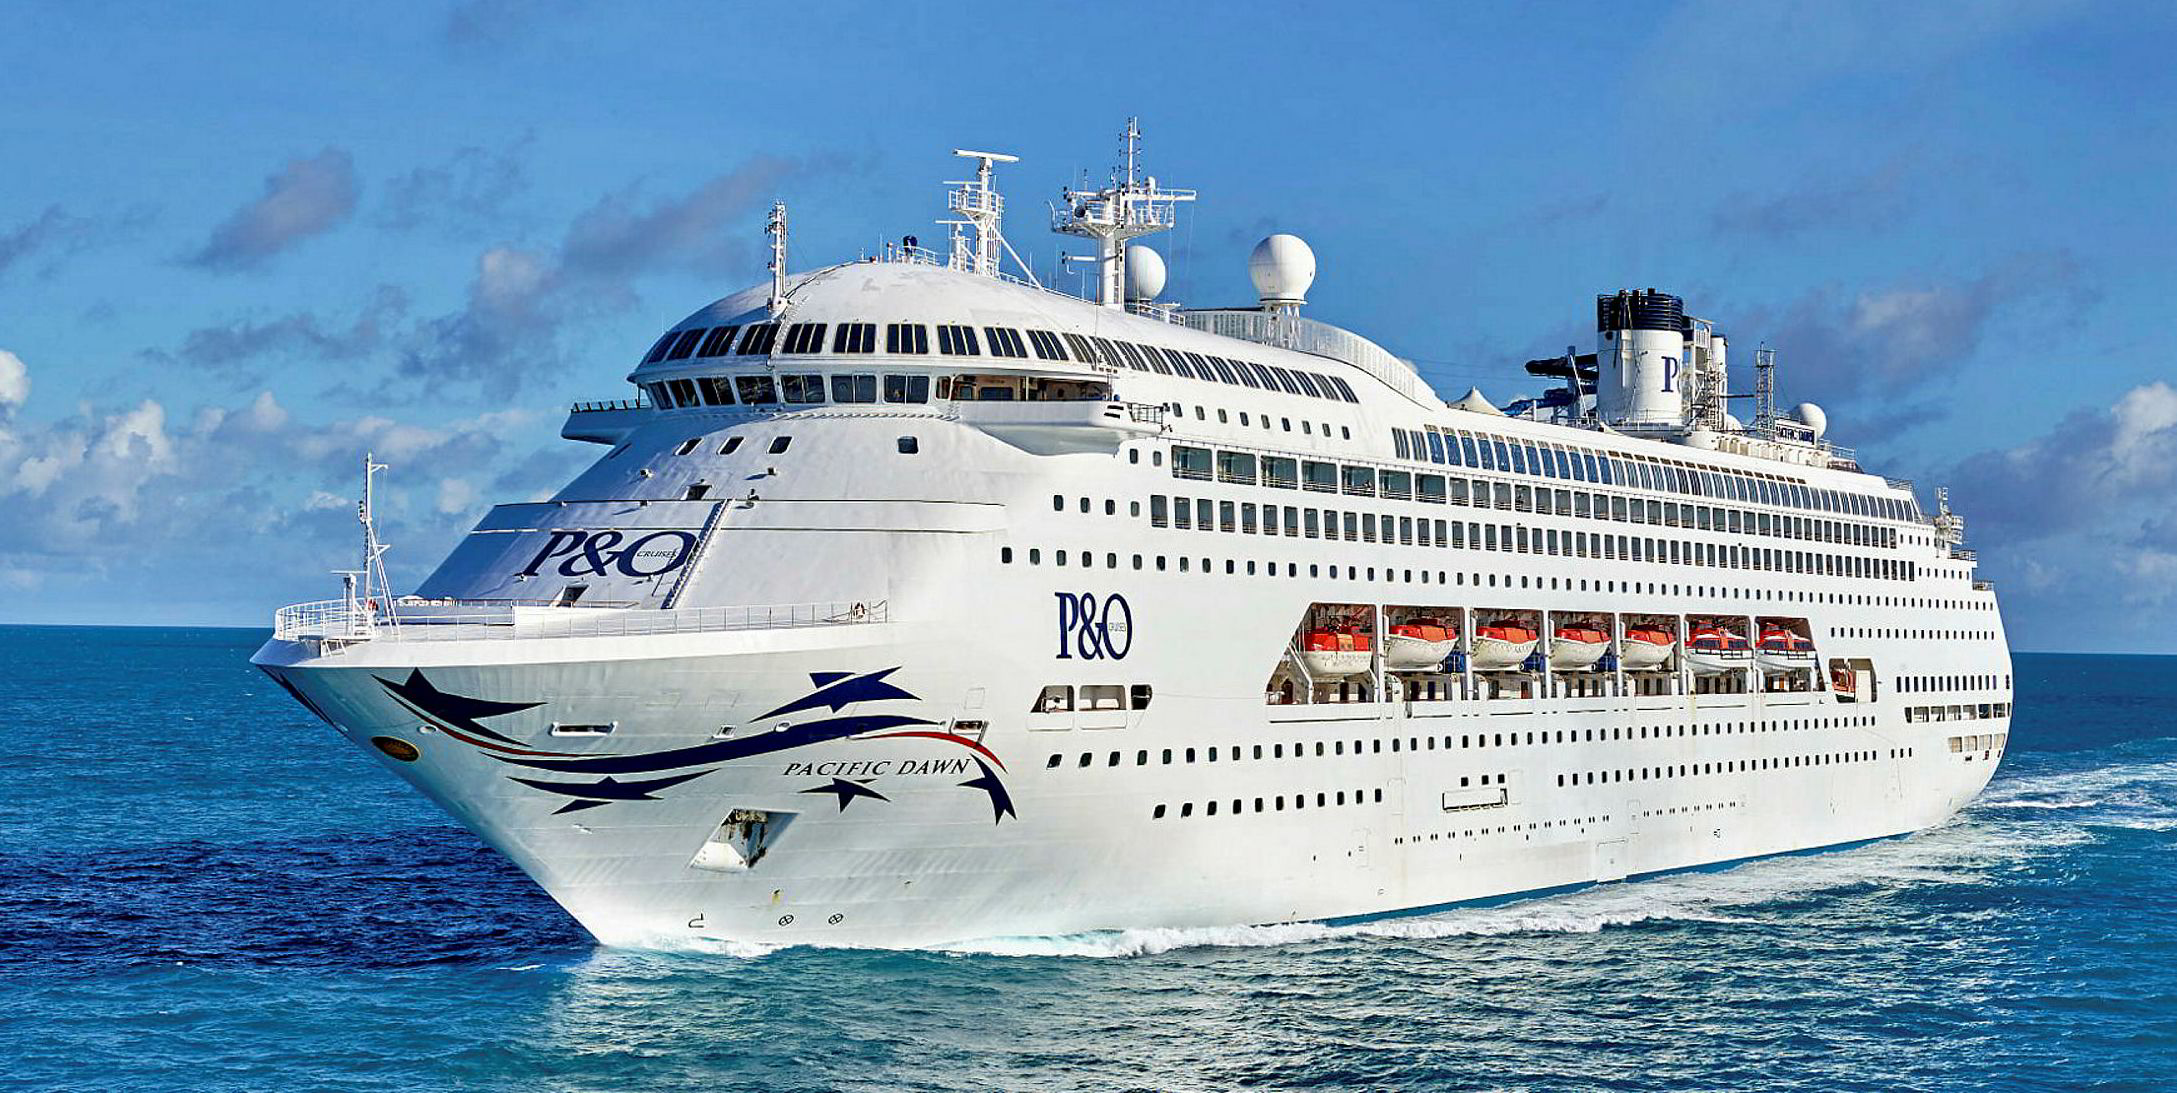 P&O Cruises Australia gives Pacific Dawn an early heaveho TradeWinds